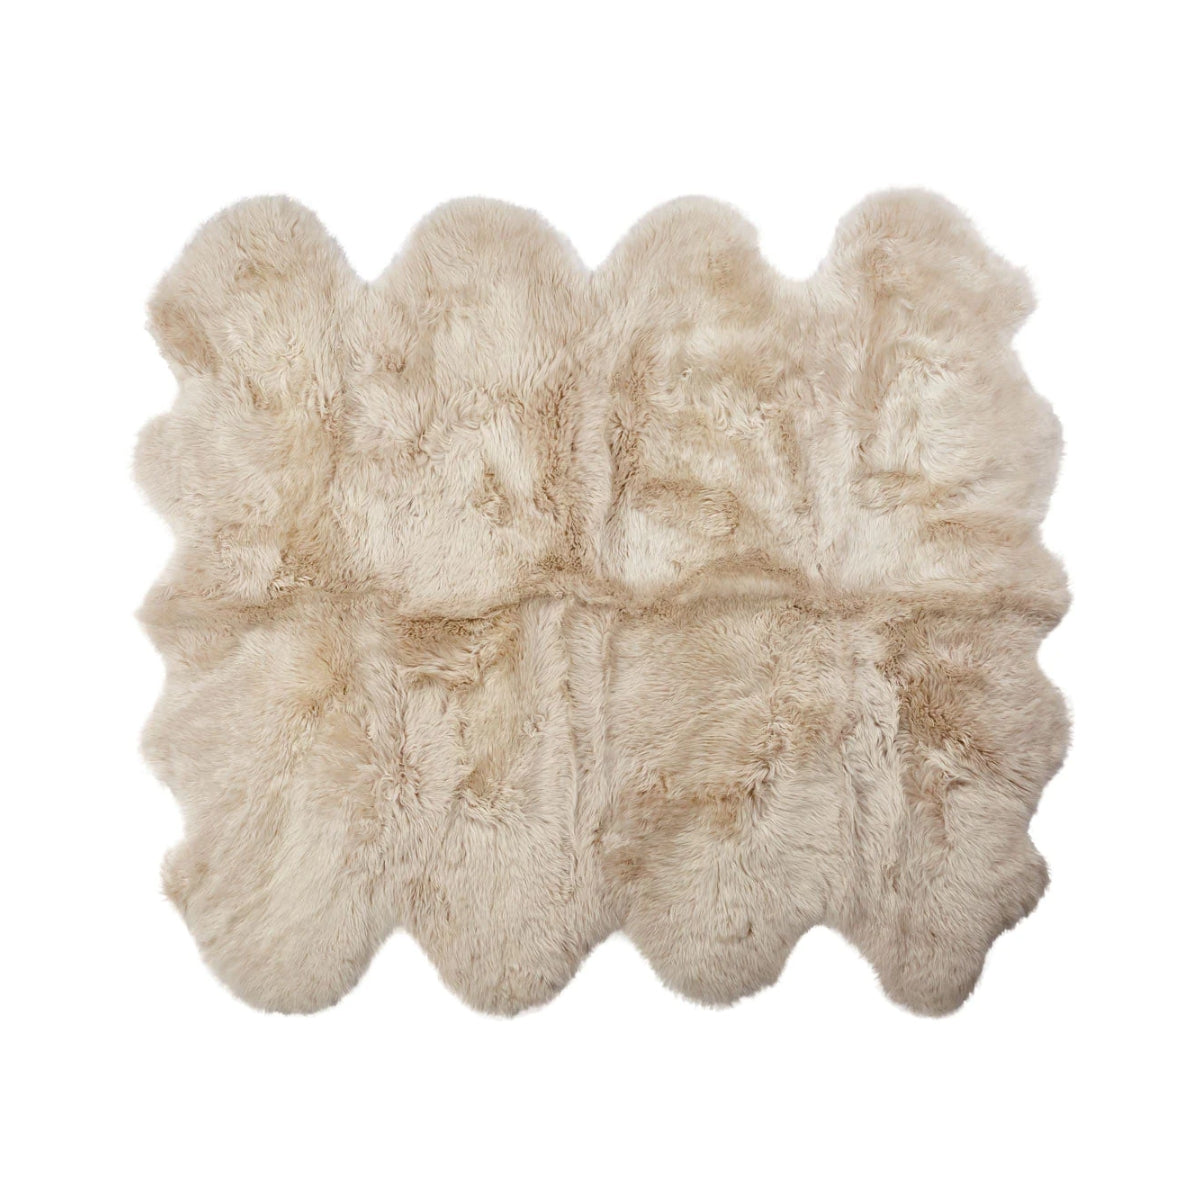 Natures Collection | Sheepskin – Long wool (8 skins)